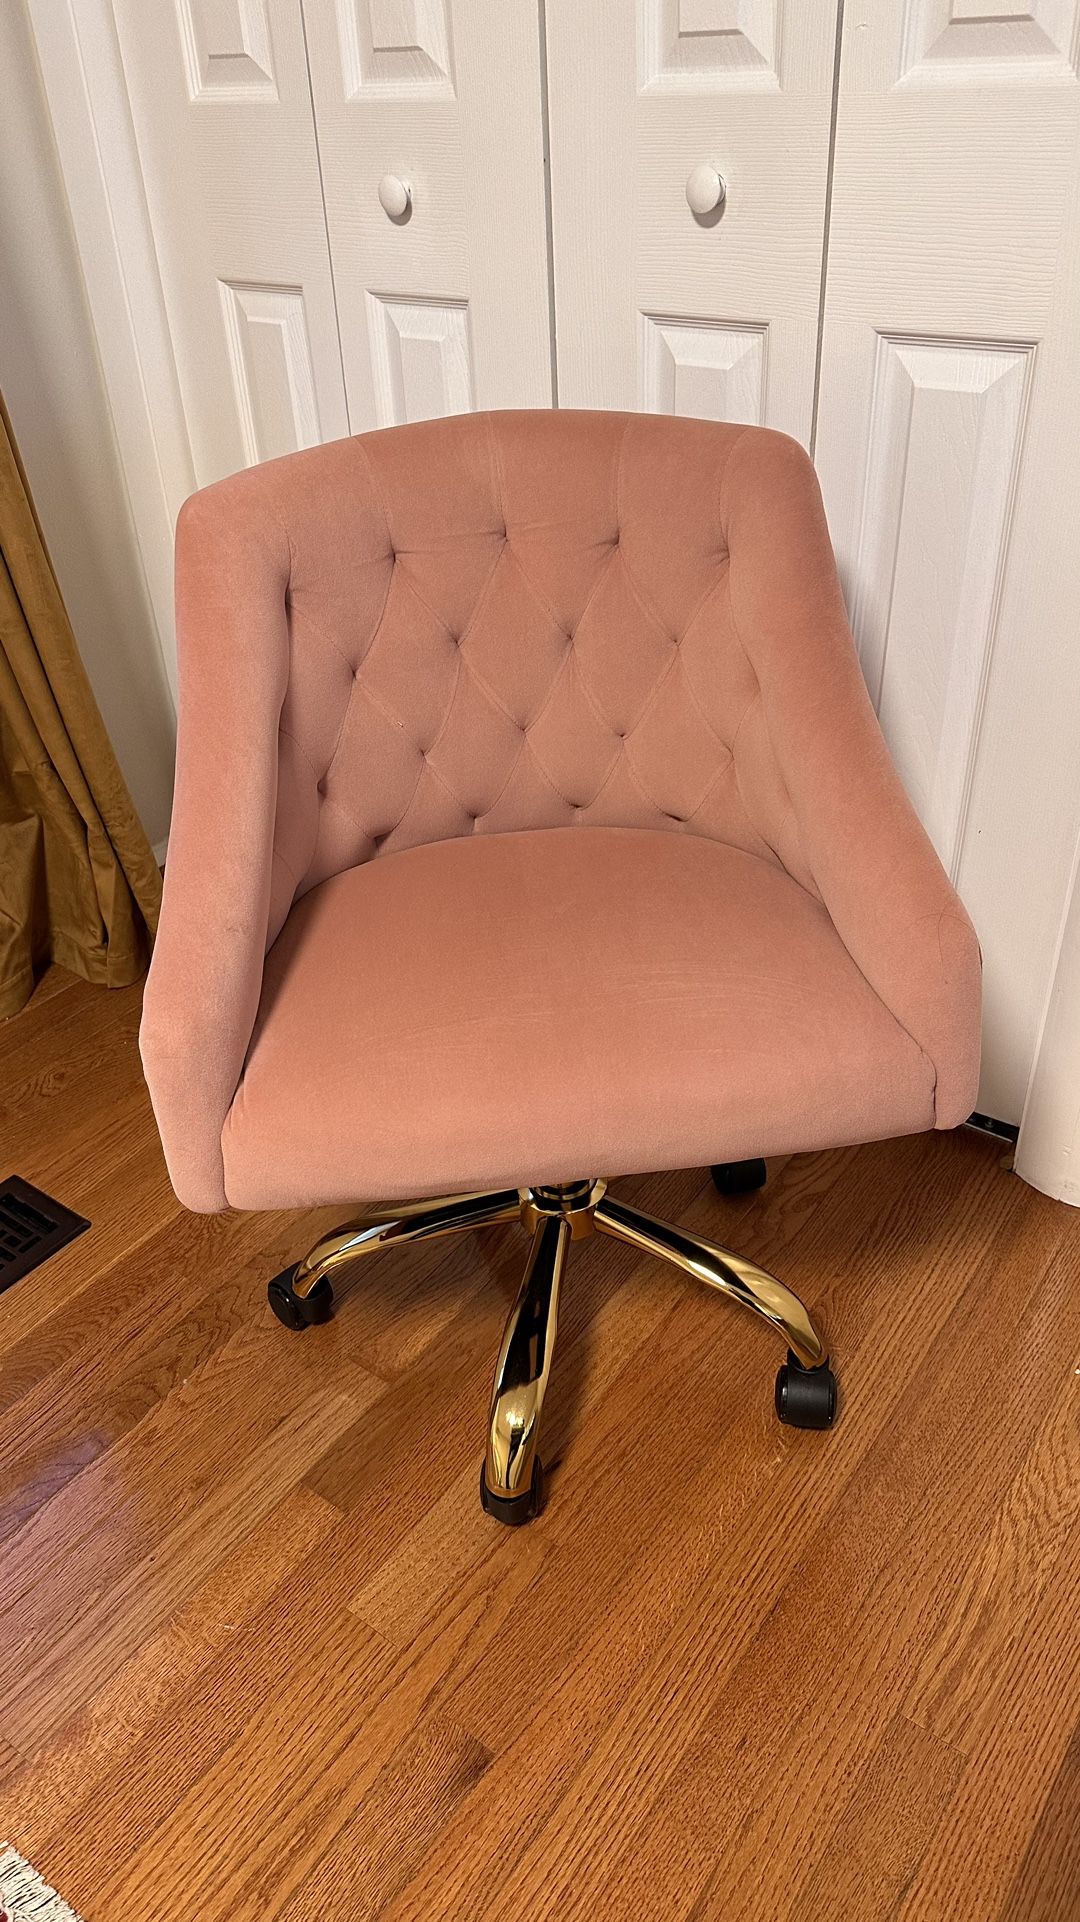 MOJAY Velvet Fabric Pink Desk Chair for Home Office